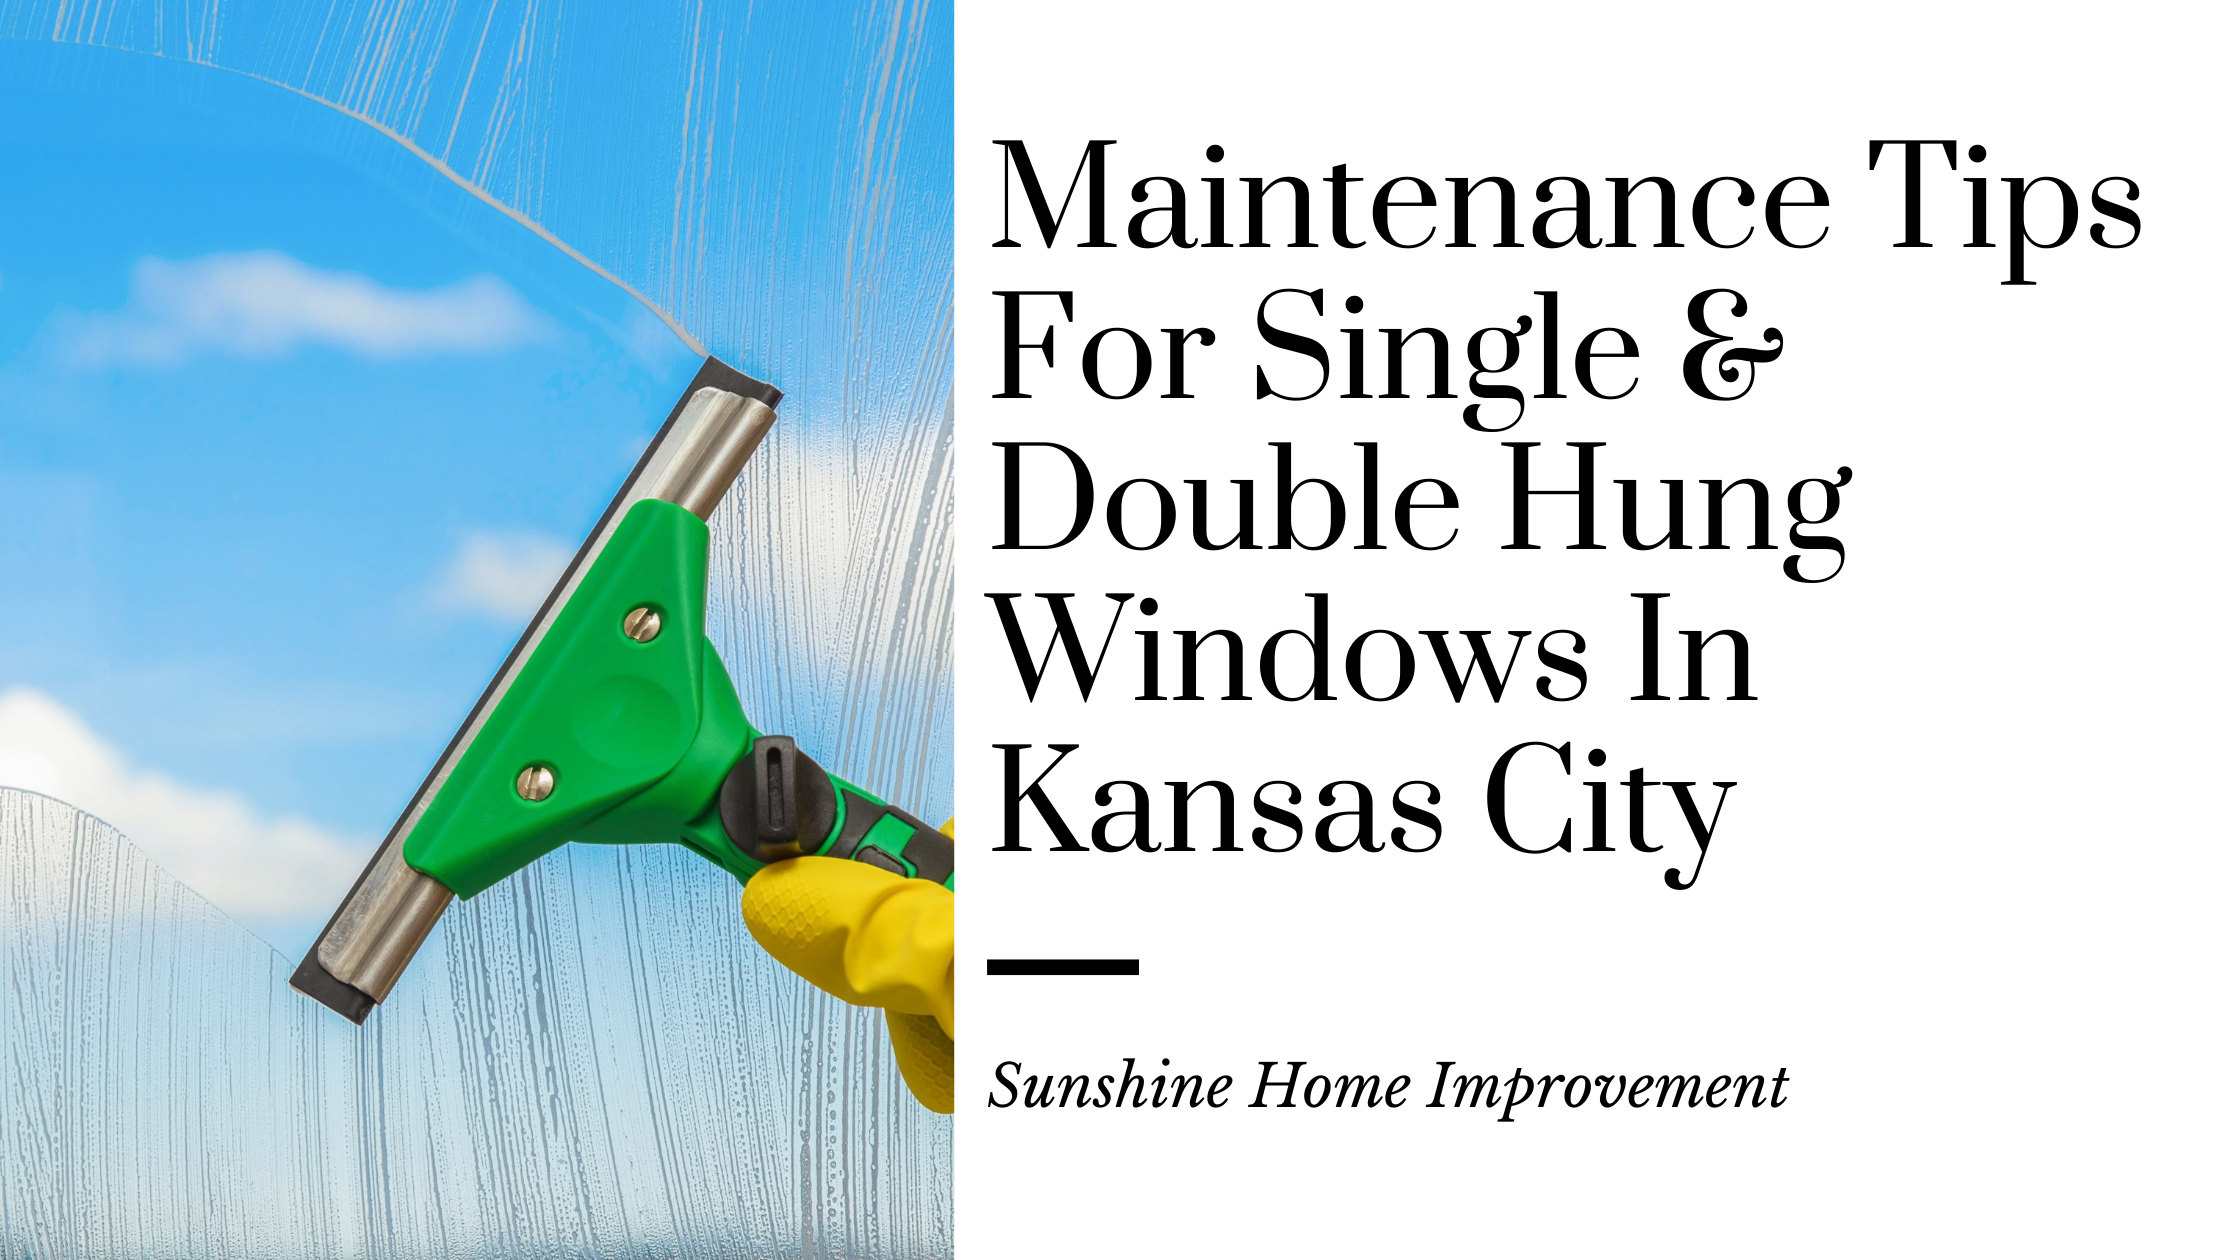 Energy efficient windows in Kansas City | Double Hung Windows in Kansas City